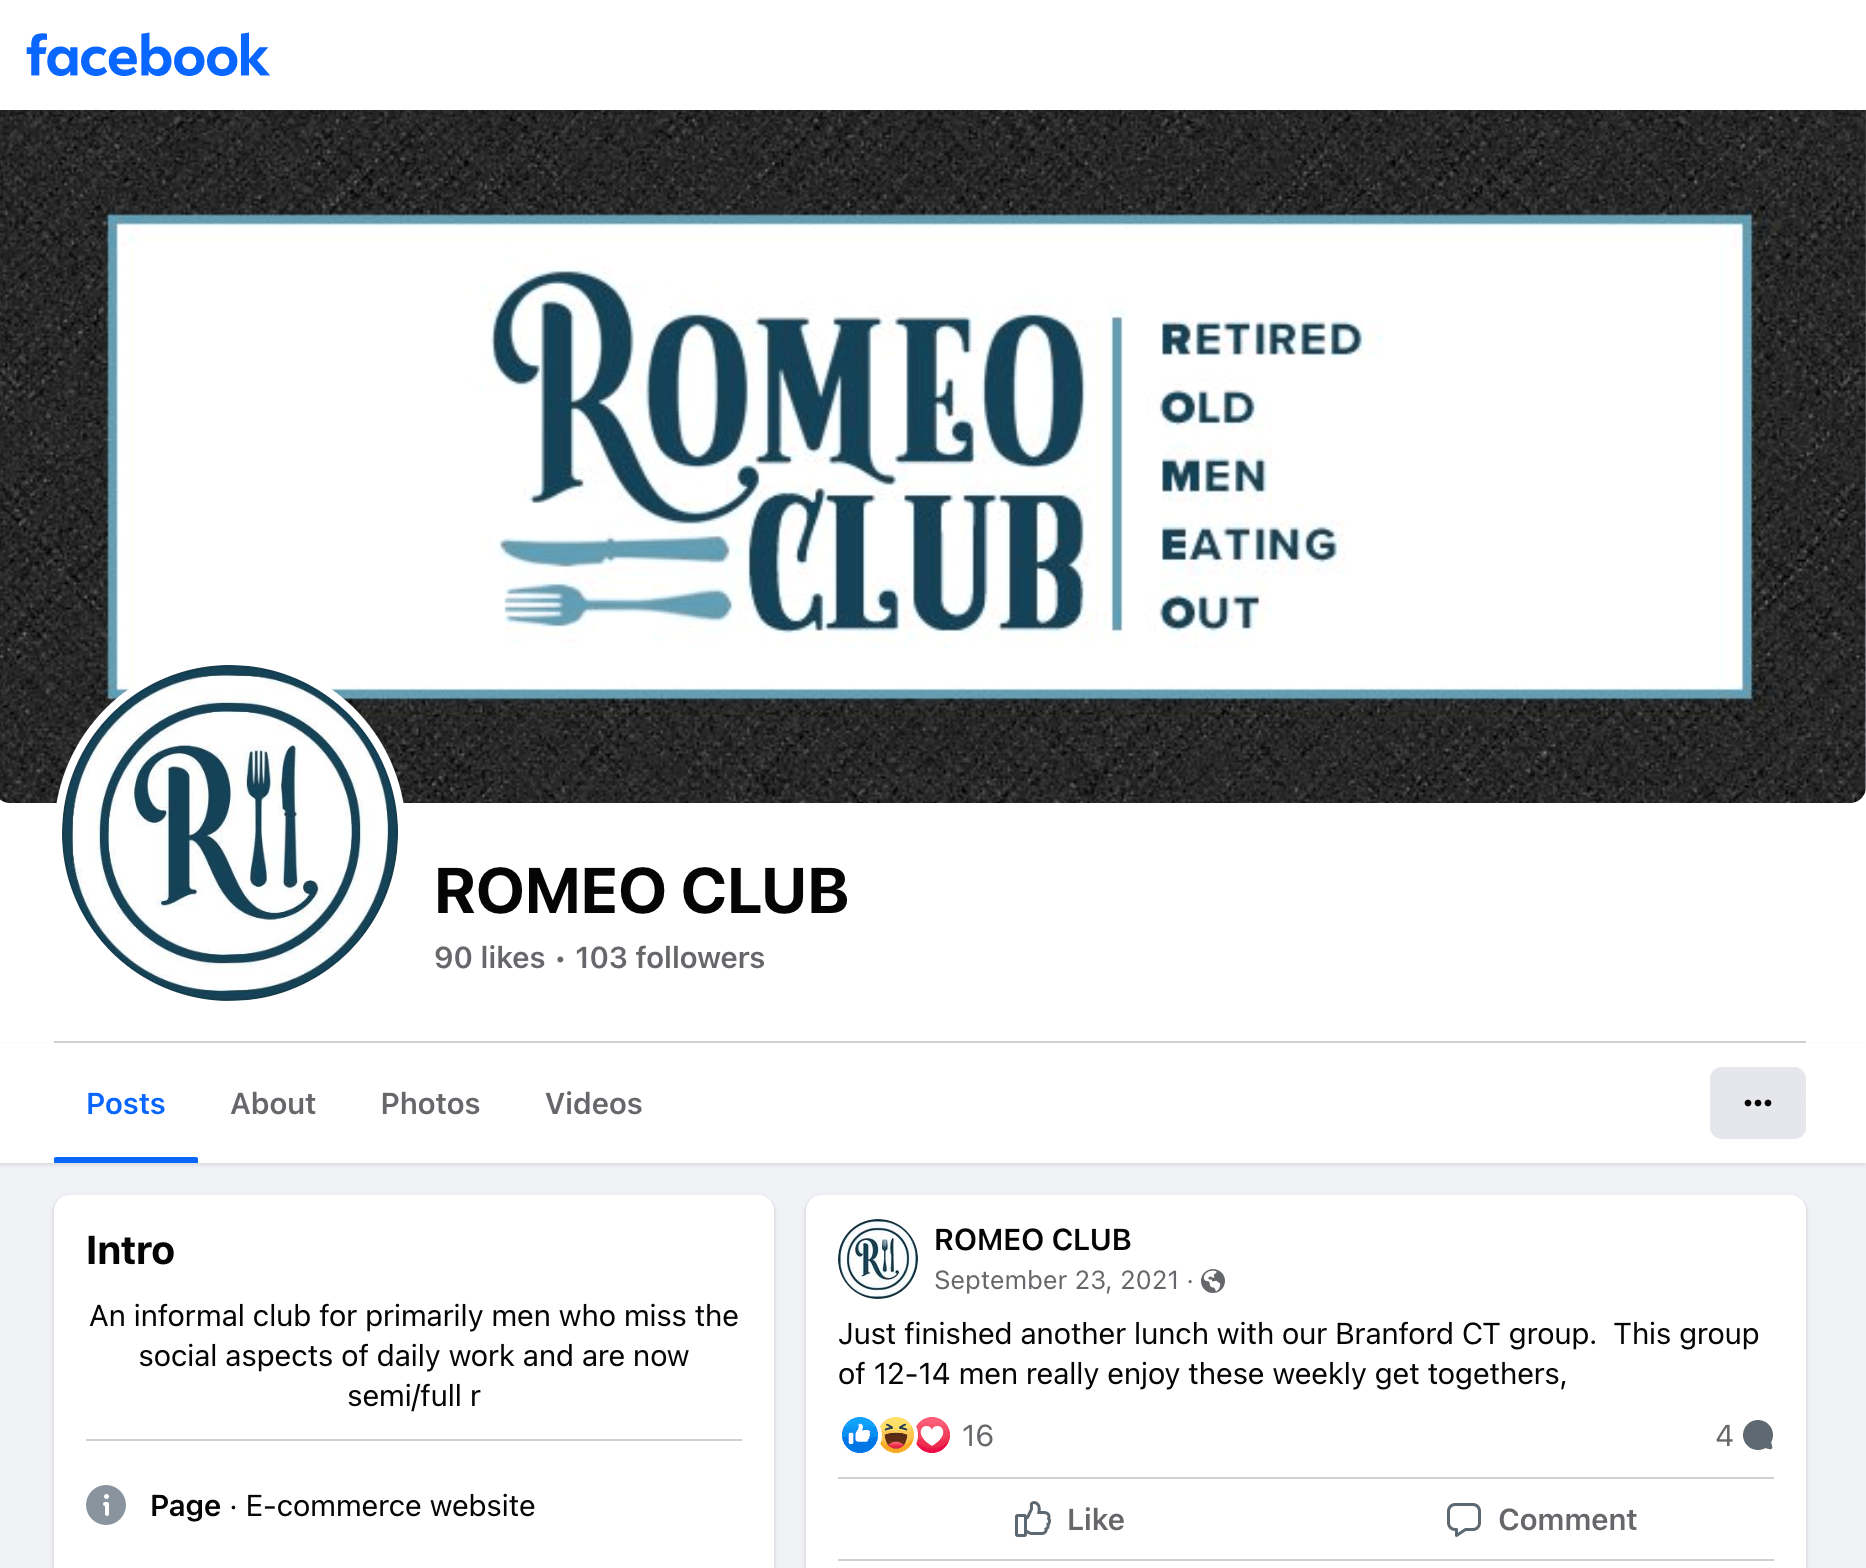 ROMEOClub.com's associated Facebook page